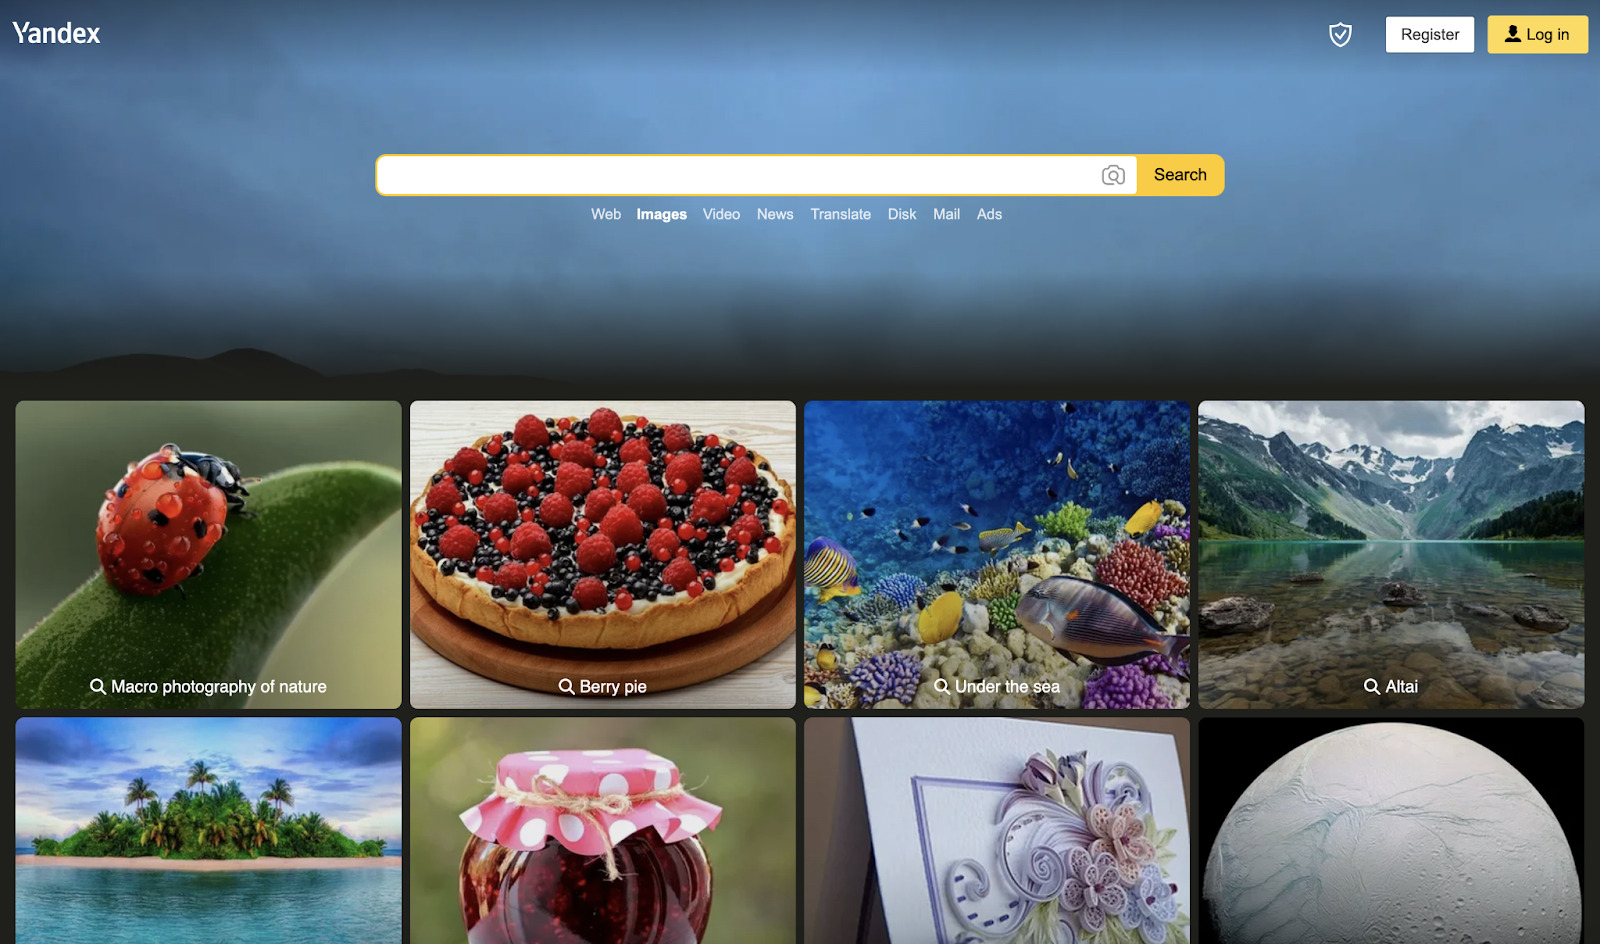 Yandex image search engine